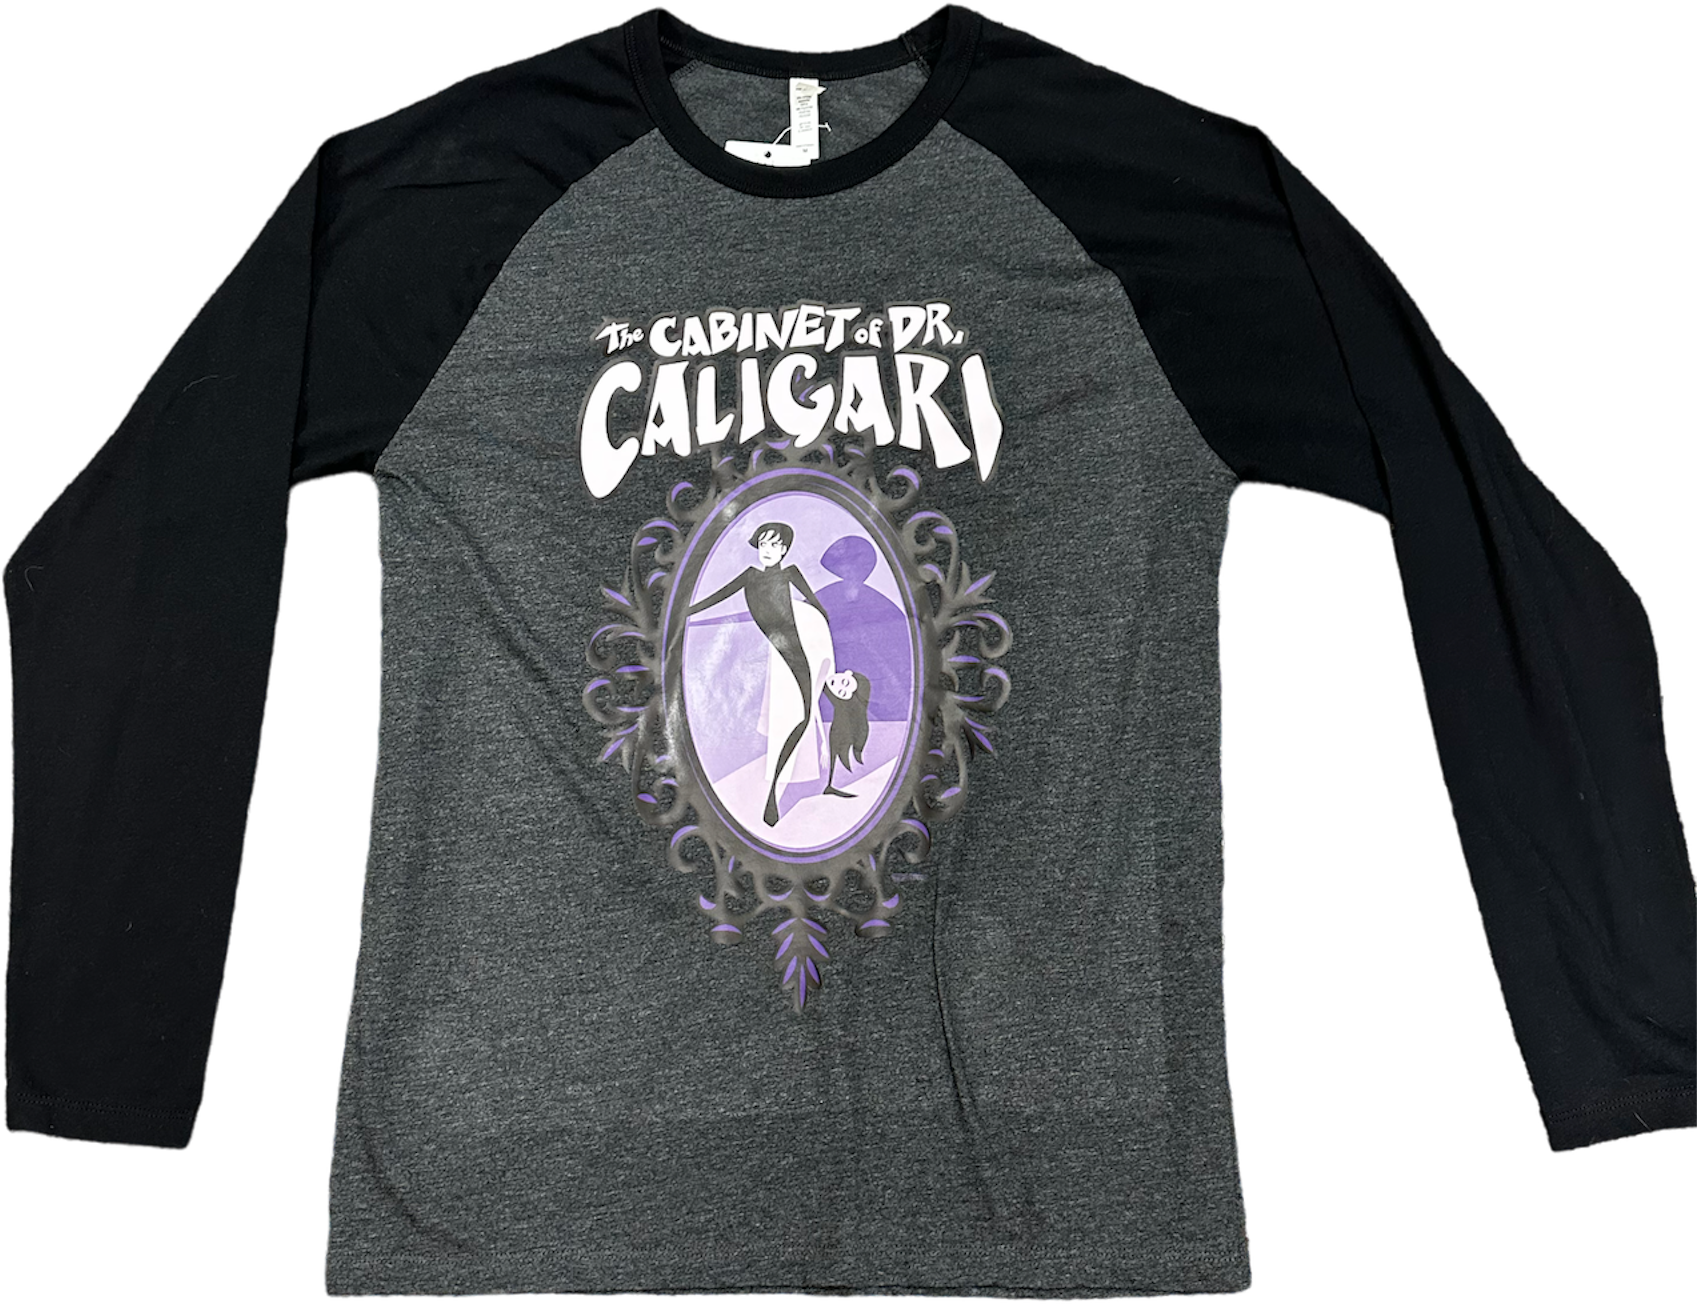 SHAG X "THE CABINET OF DR. CALIGARI" CHARCOAL RAGLAN